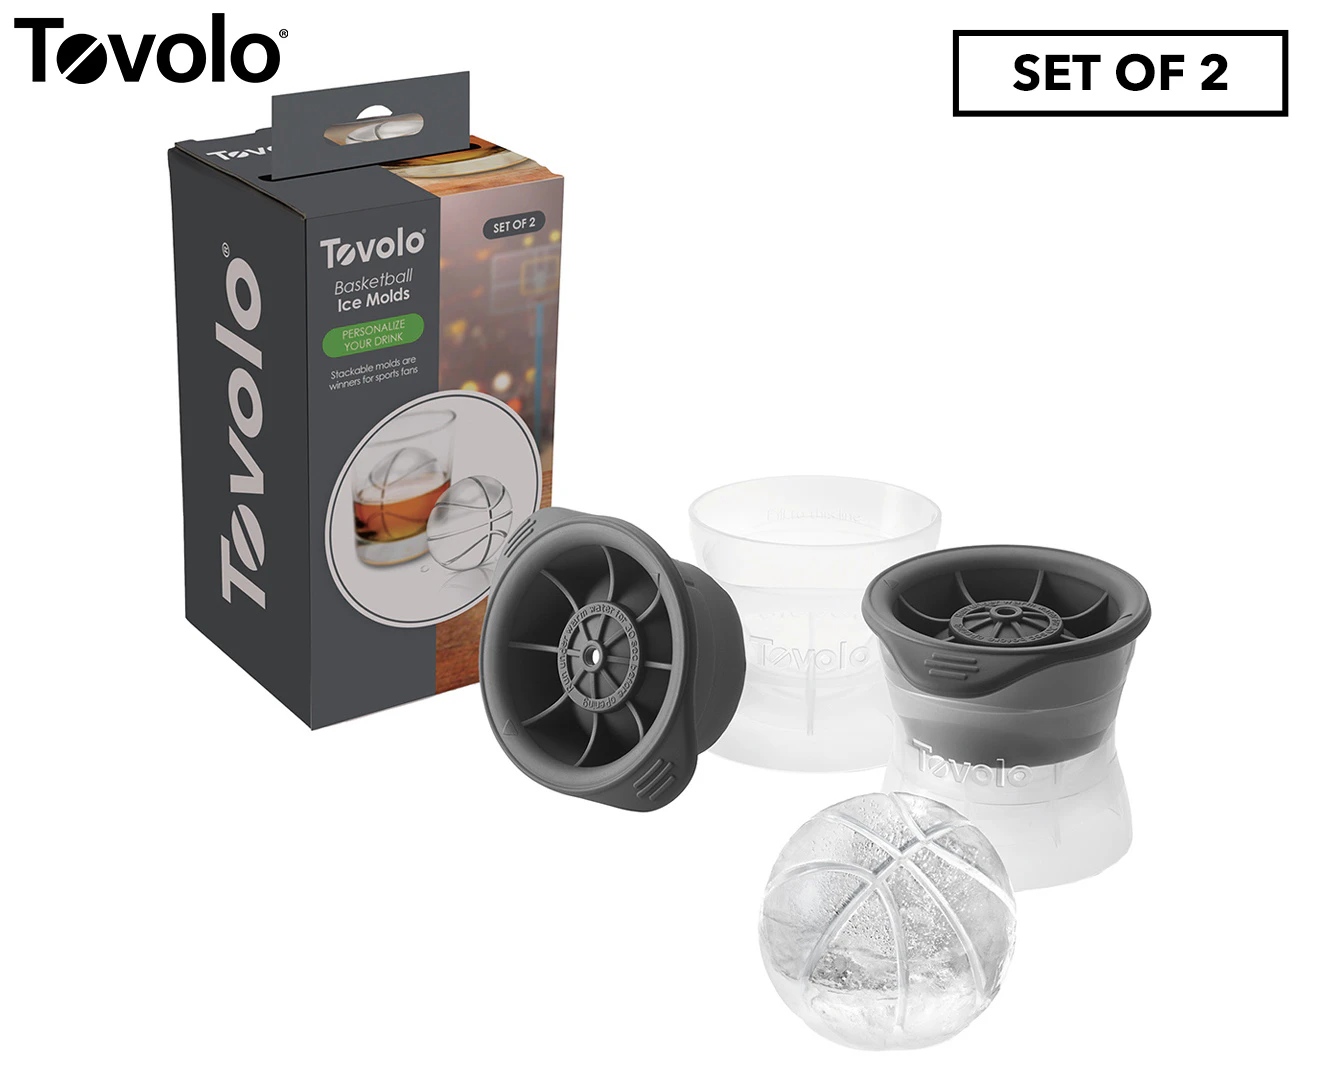 Tovolo Set of 4 Tennis and Golf Ball Ice Molds